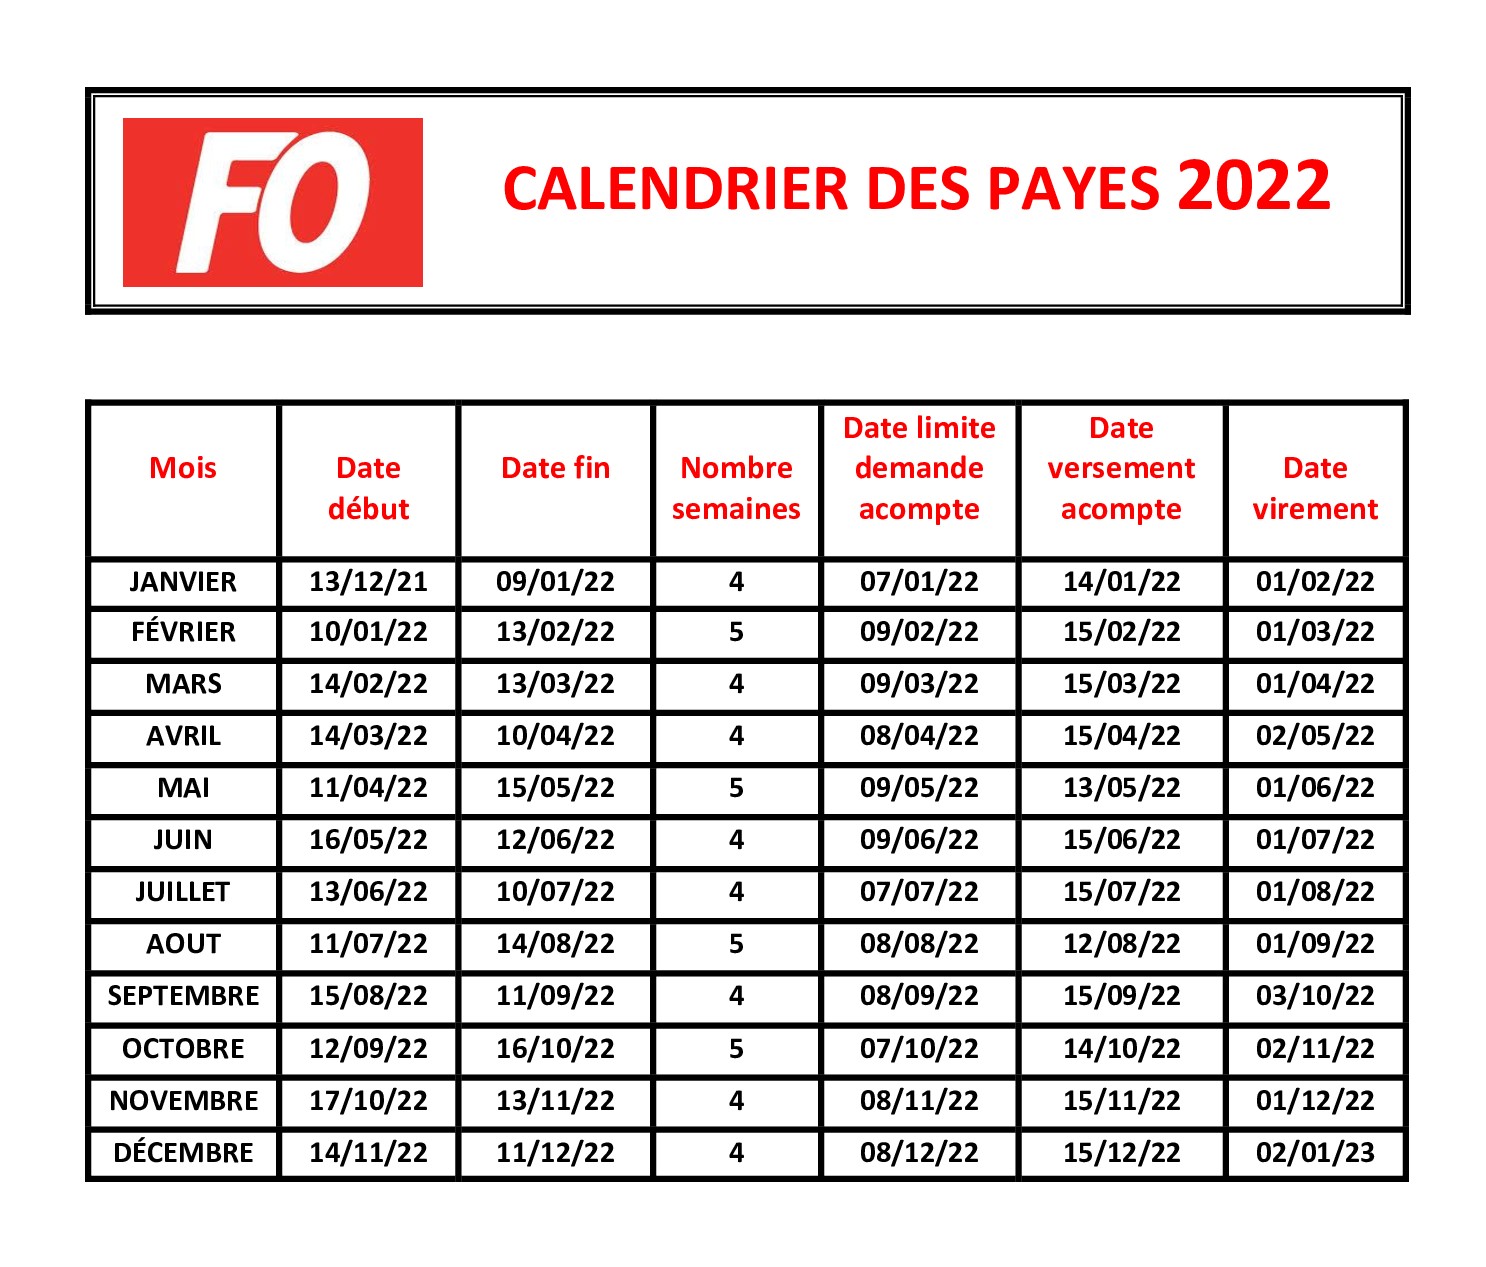 CALENDRIER-DES-PAYES-2022 Syndicat FO au service des salariés d'ADREXO - Calendrier des payes 2022